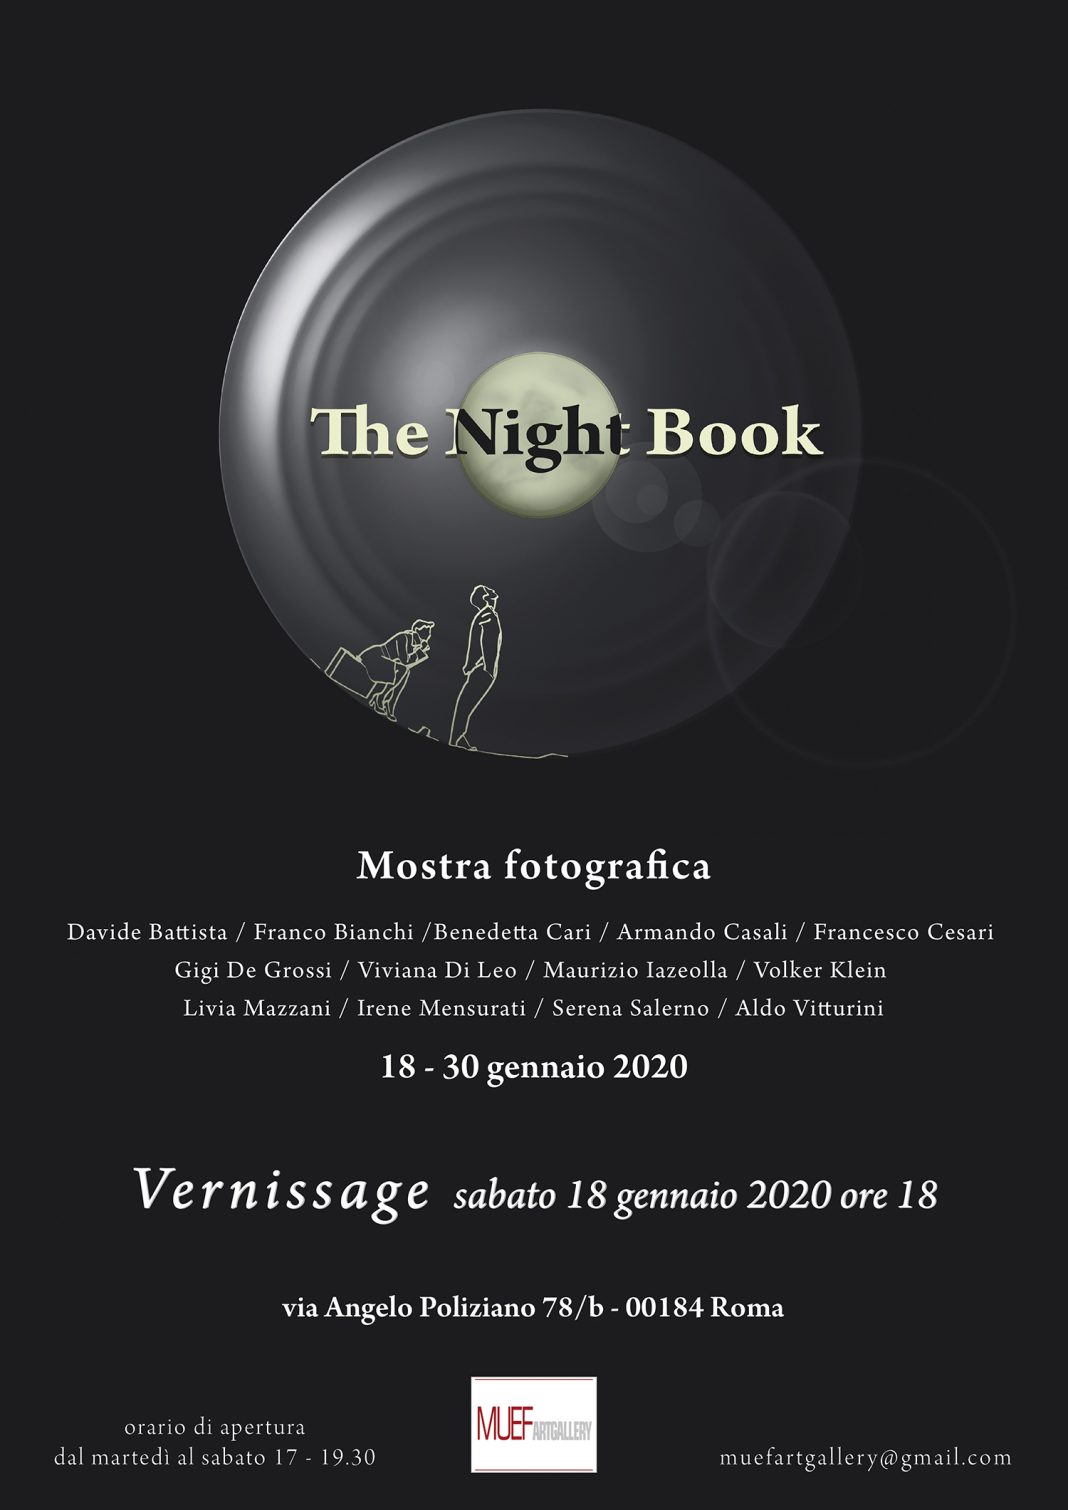 The Night Bookhttps://www.exibart.com/repository/media/formidable/11/1_locandina_piccola-1068x1510.jpg